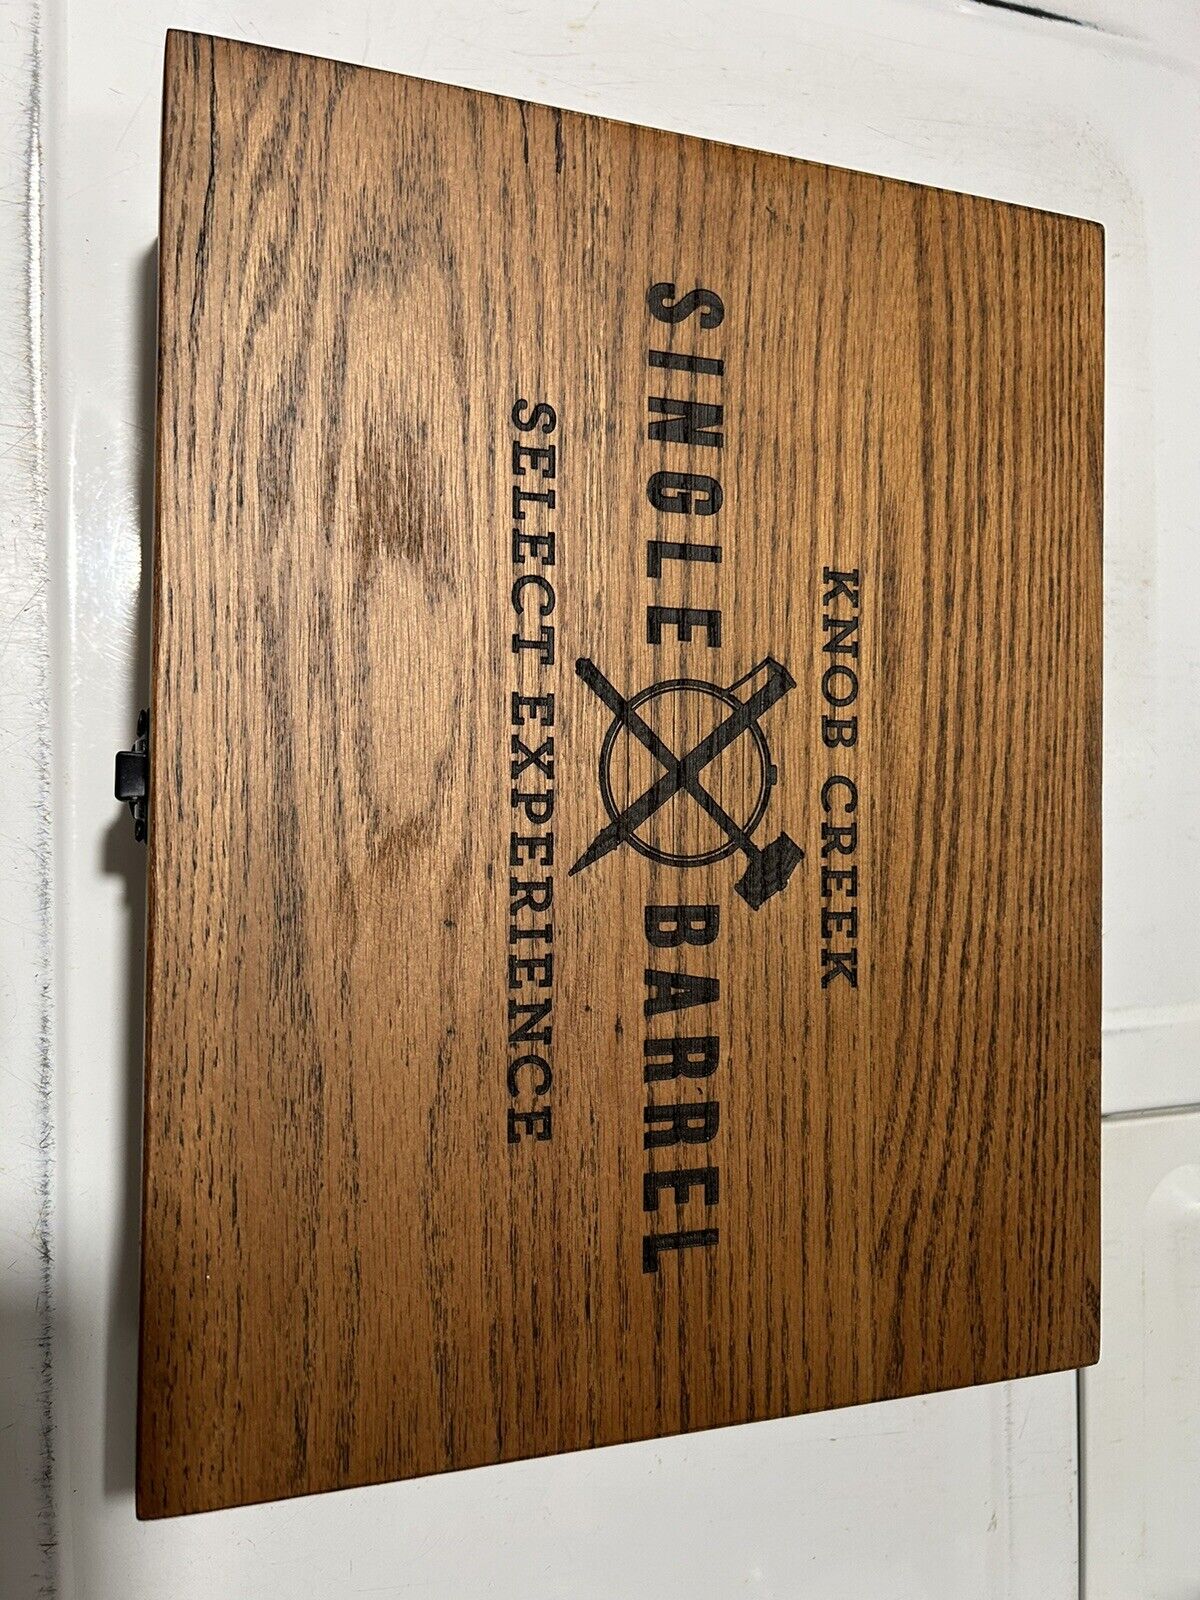 Knob Creek Bourbon Single Barrel Select Experience wood box RARE Collectible